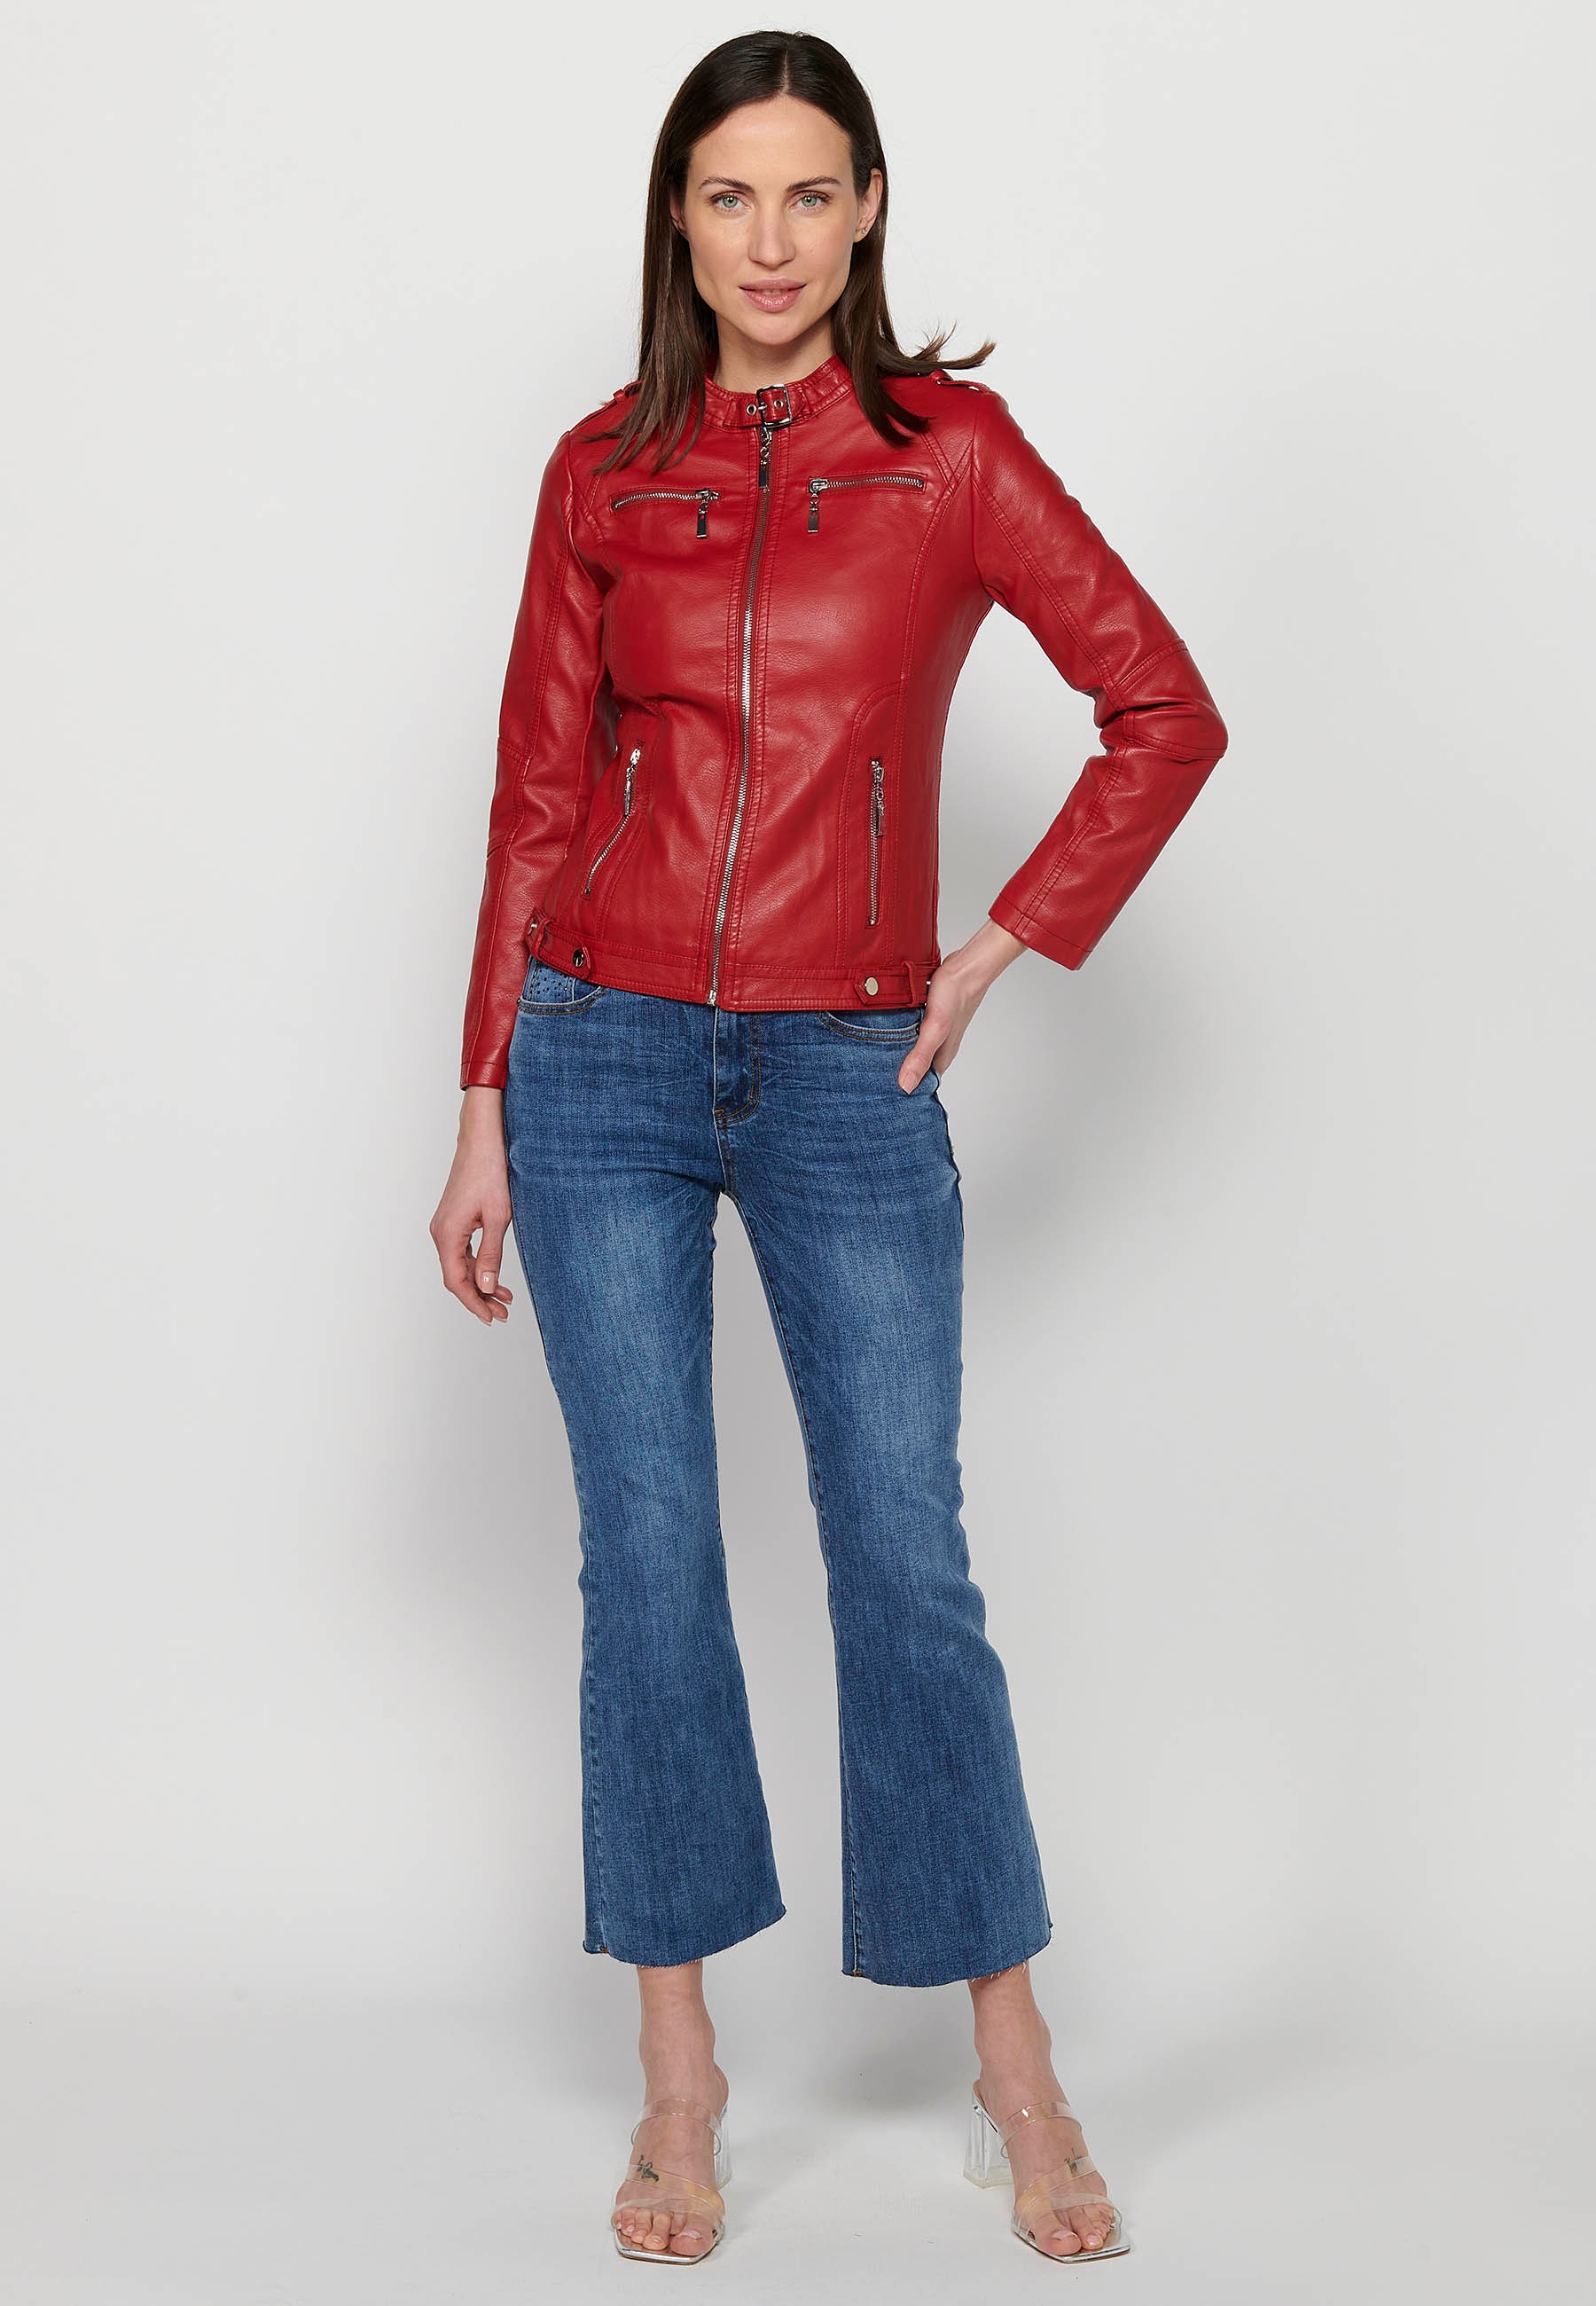 Long sleeve jacket, mandarin collar, red color for women